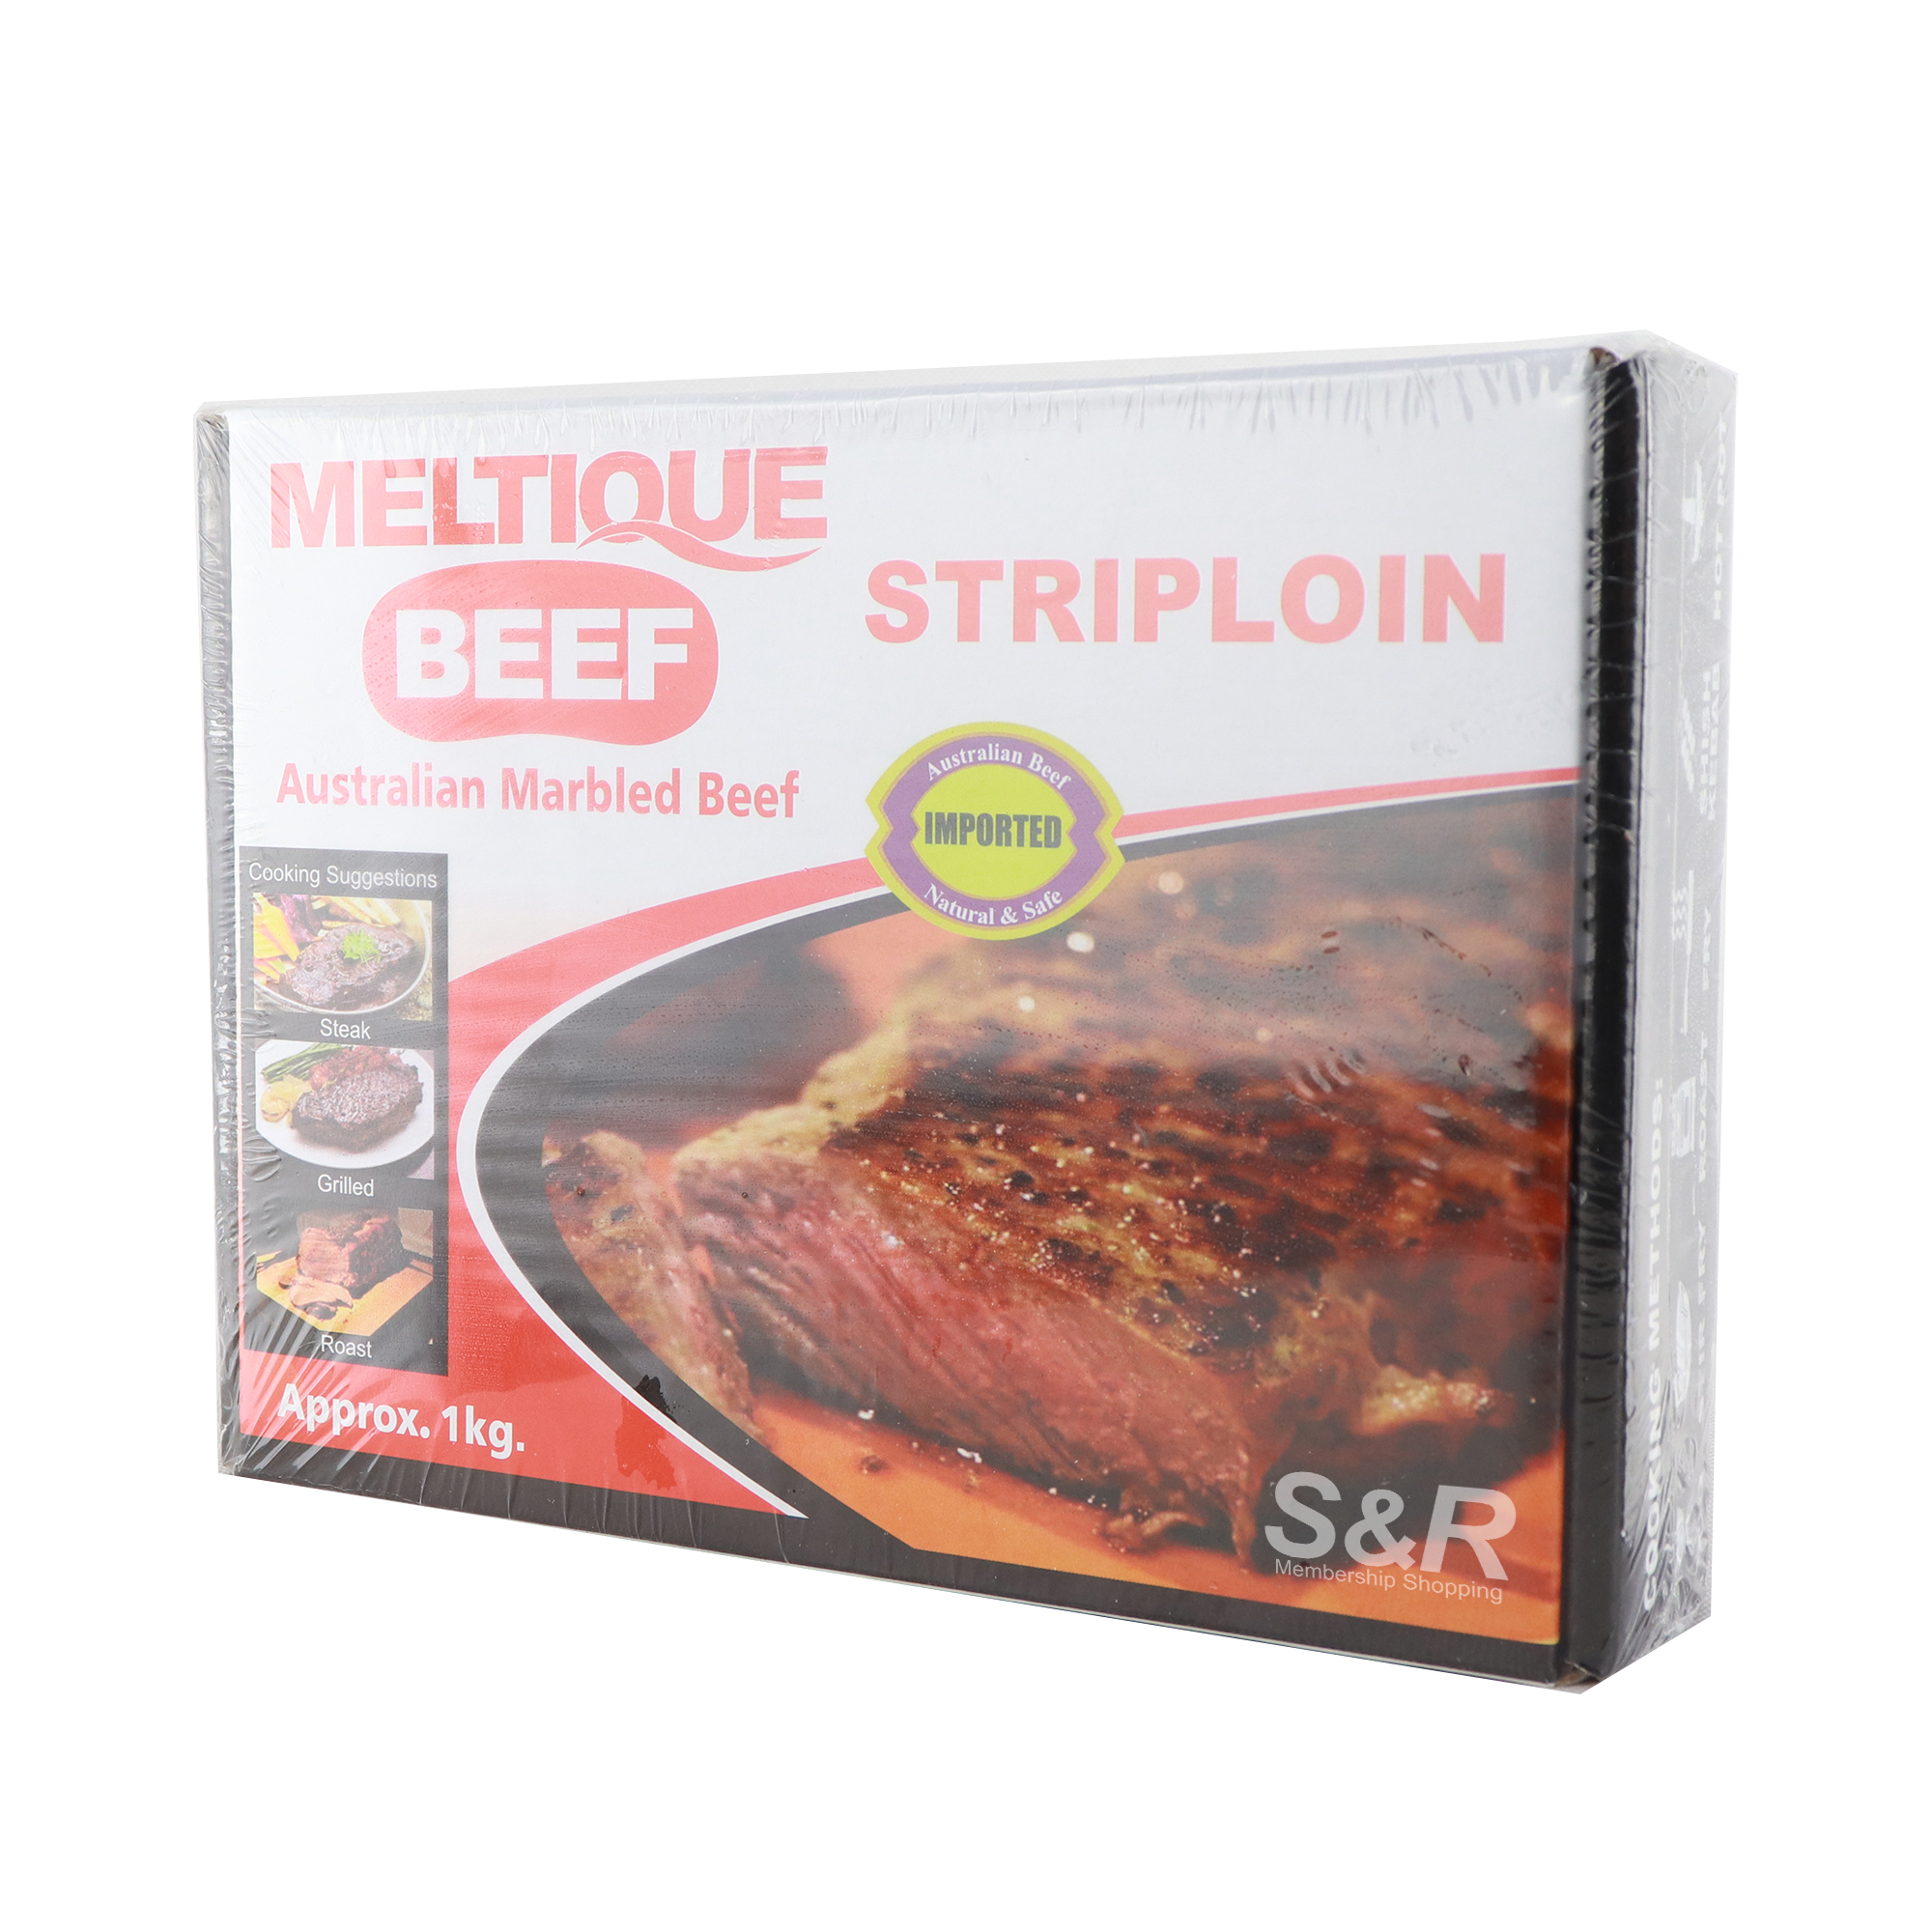 Meltique Beef Australian Marbled Beef Striploin 1kg